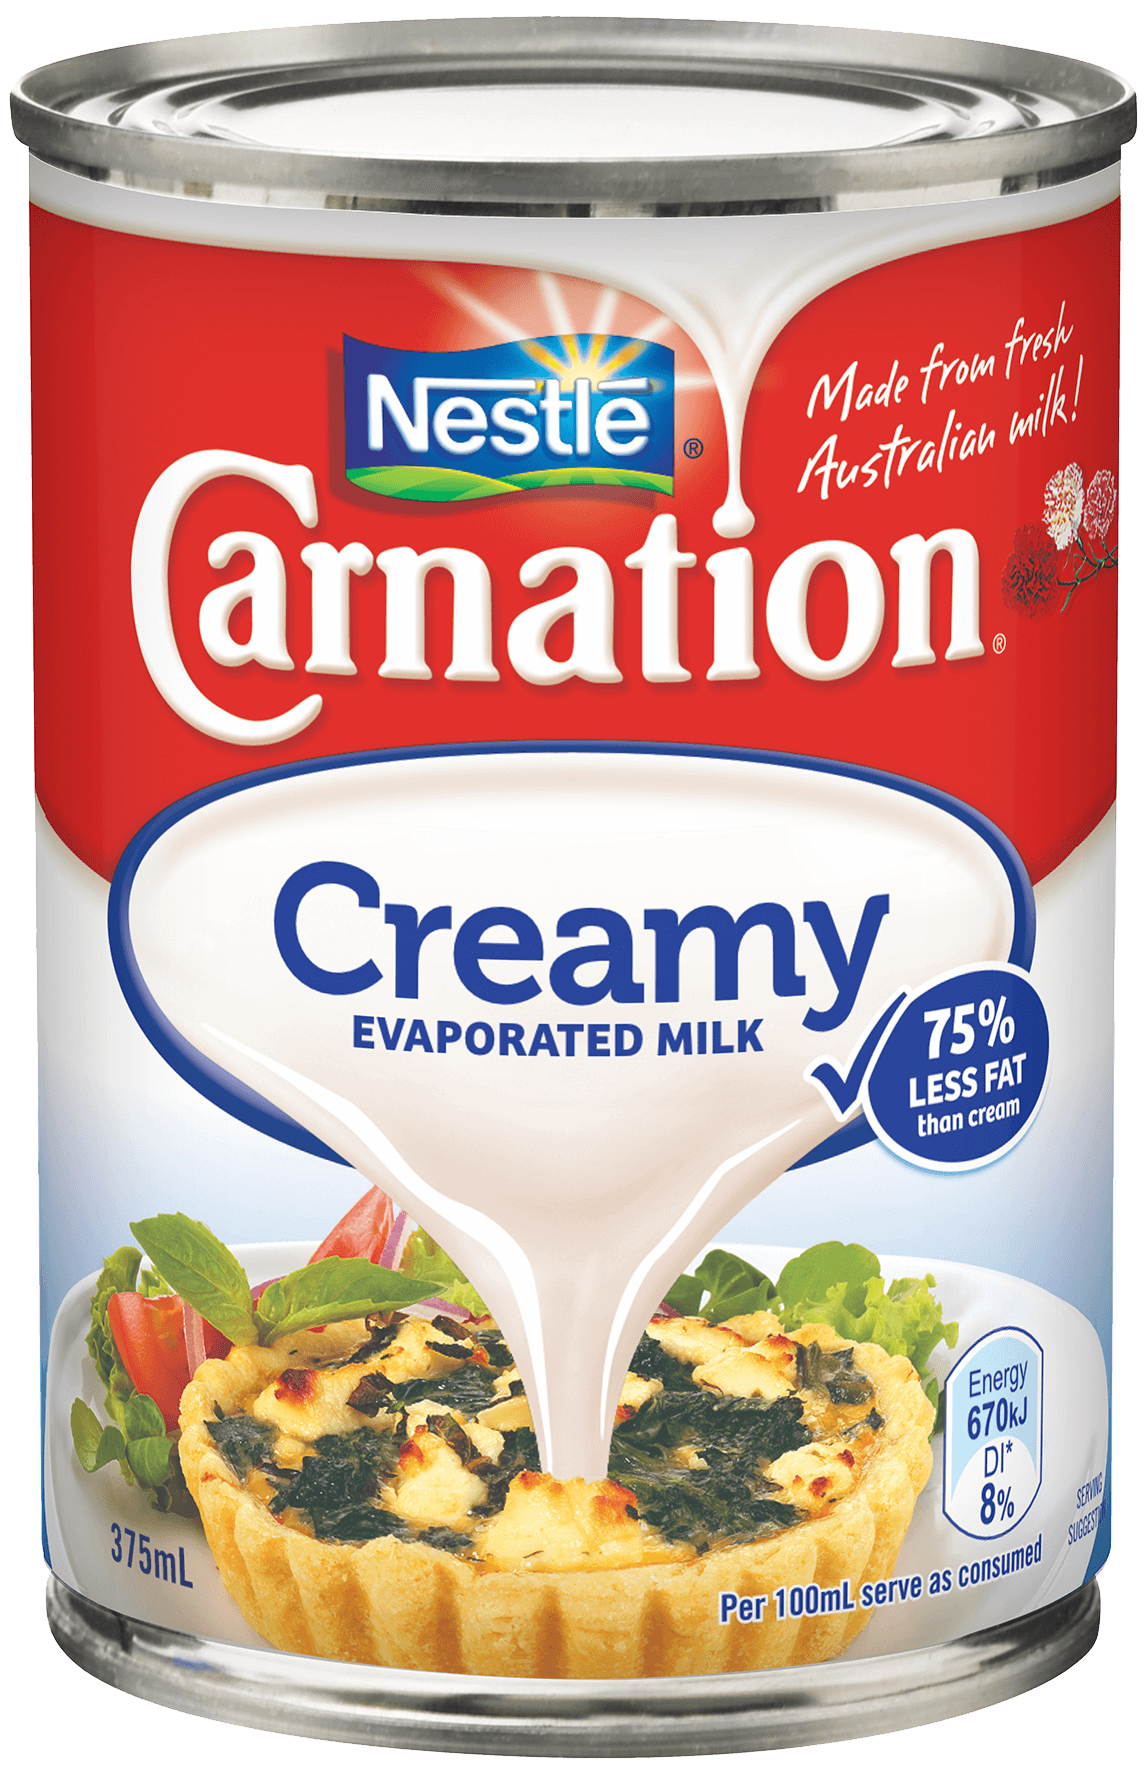 Carnation Evaporated Milk Creamy 340ml